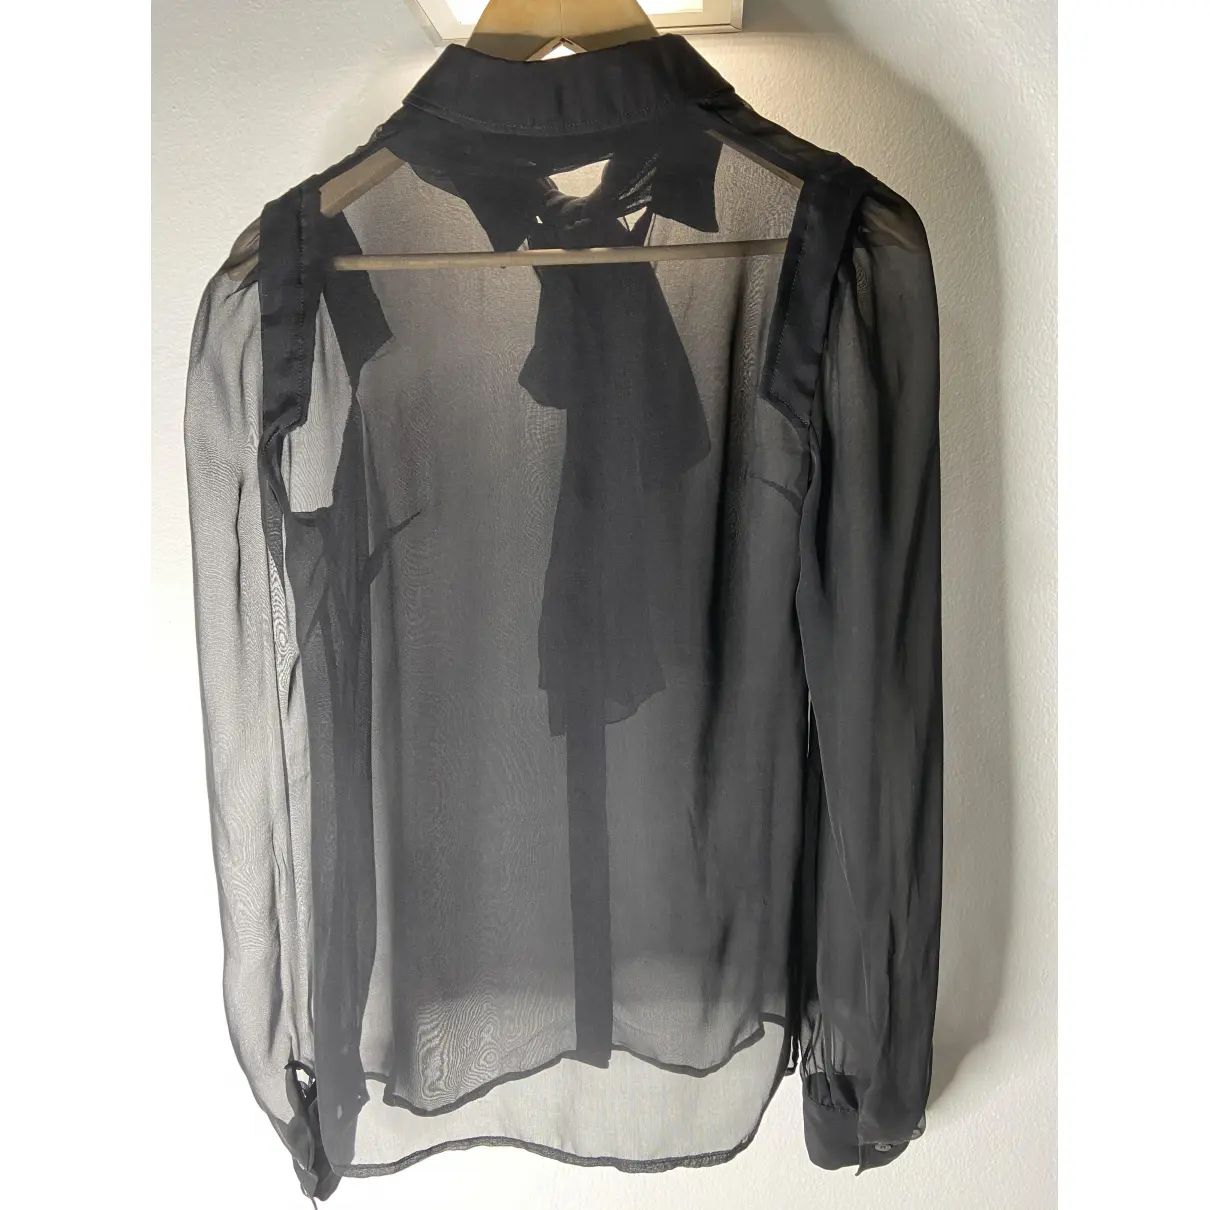 Buy D&G Silk blouse online